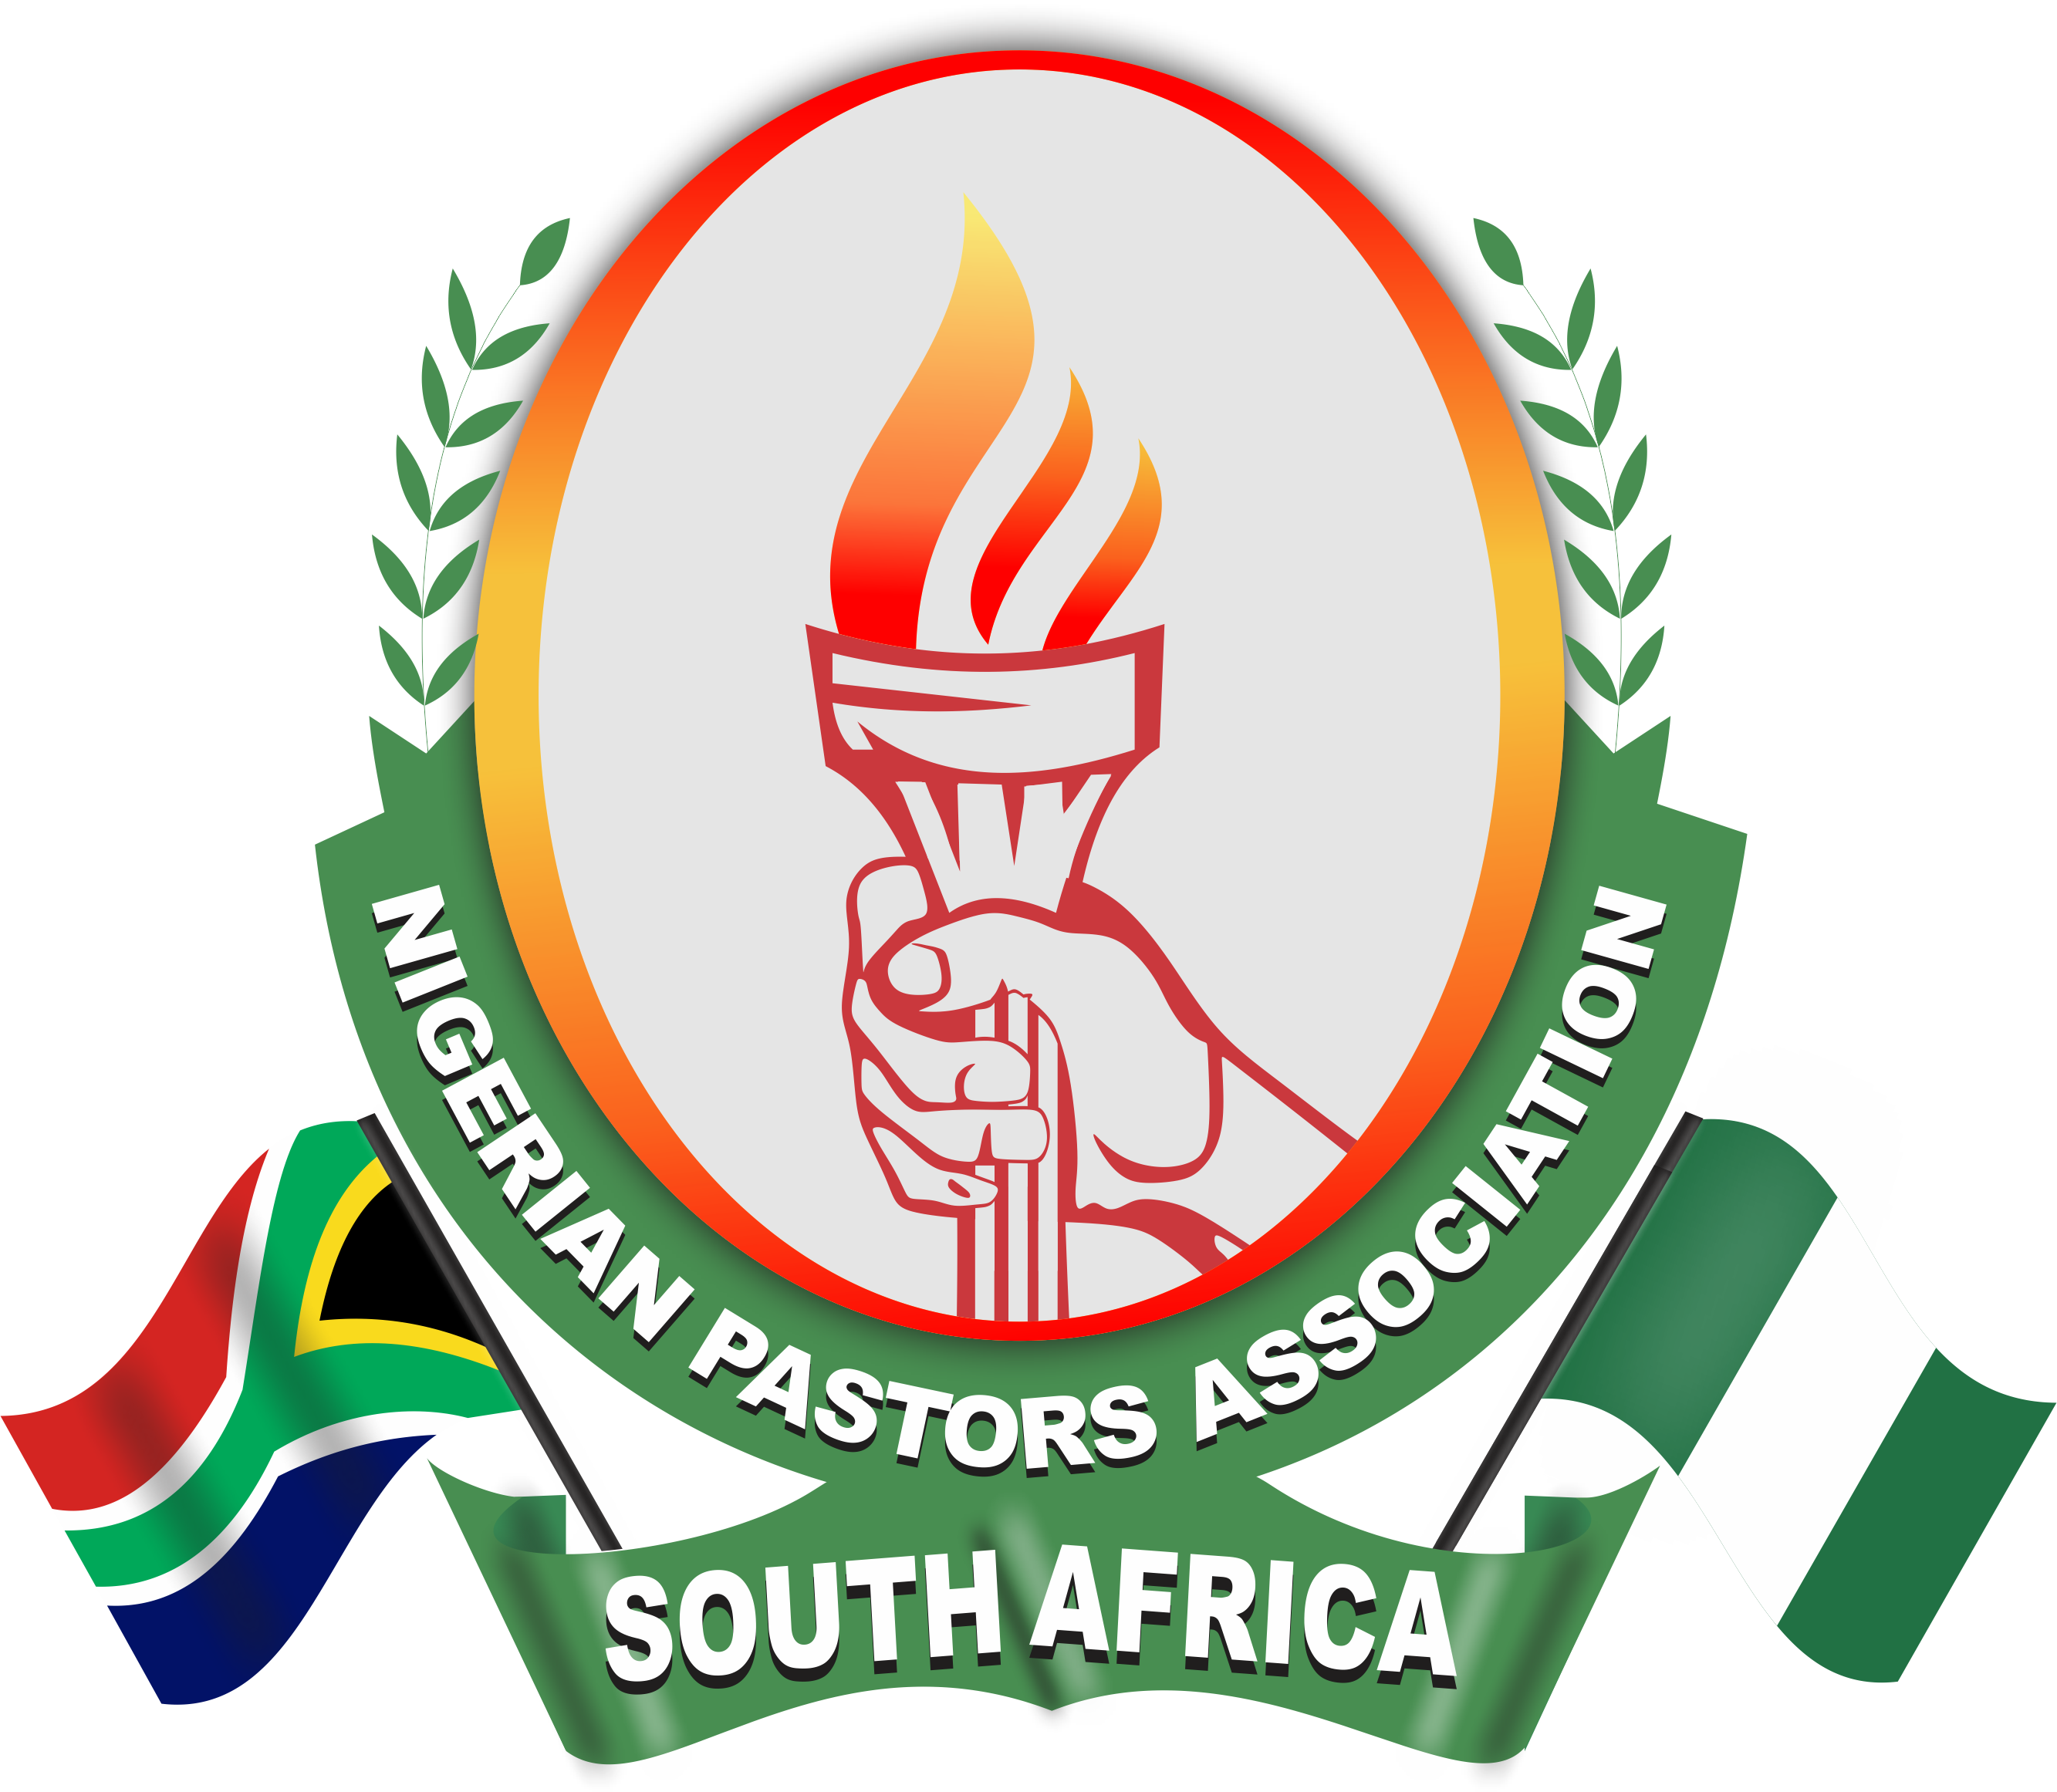 Nigerian Pastors Association South Africa - Nigerian Pastors Association South Africa (2666x2323)